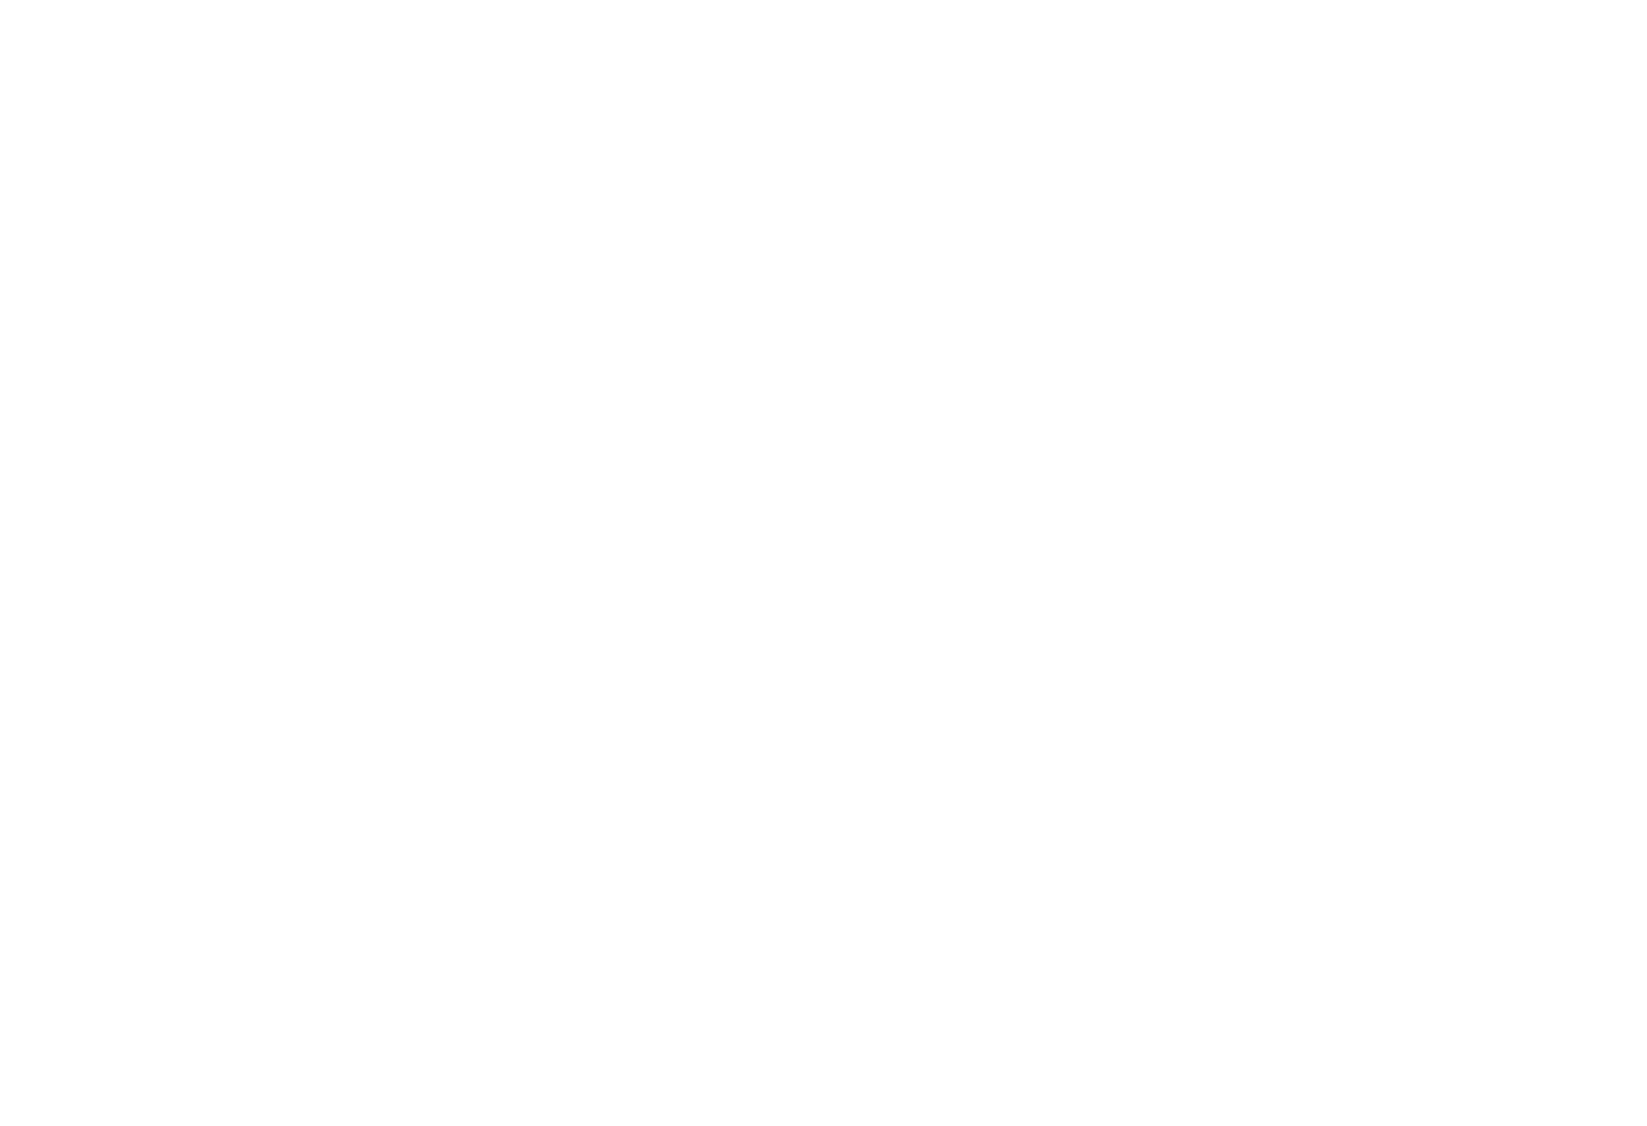 bloodsample360-logo-transparent-cropped-white